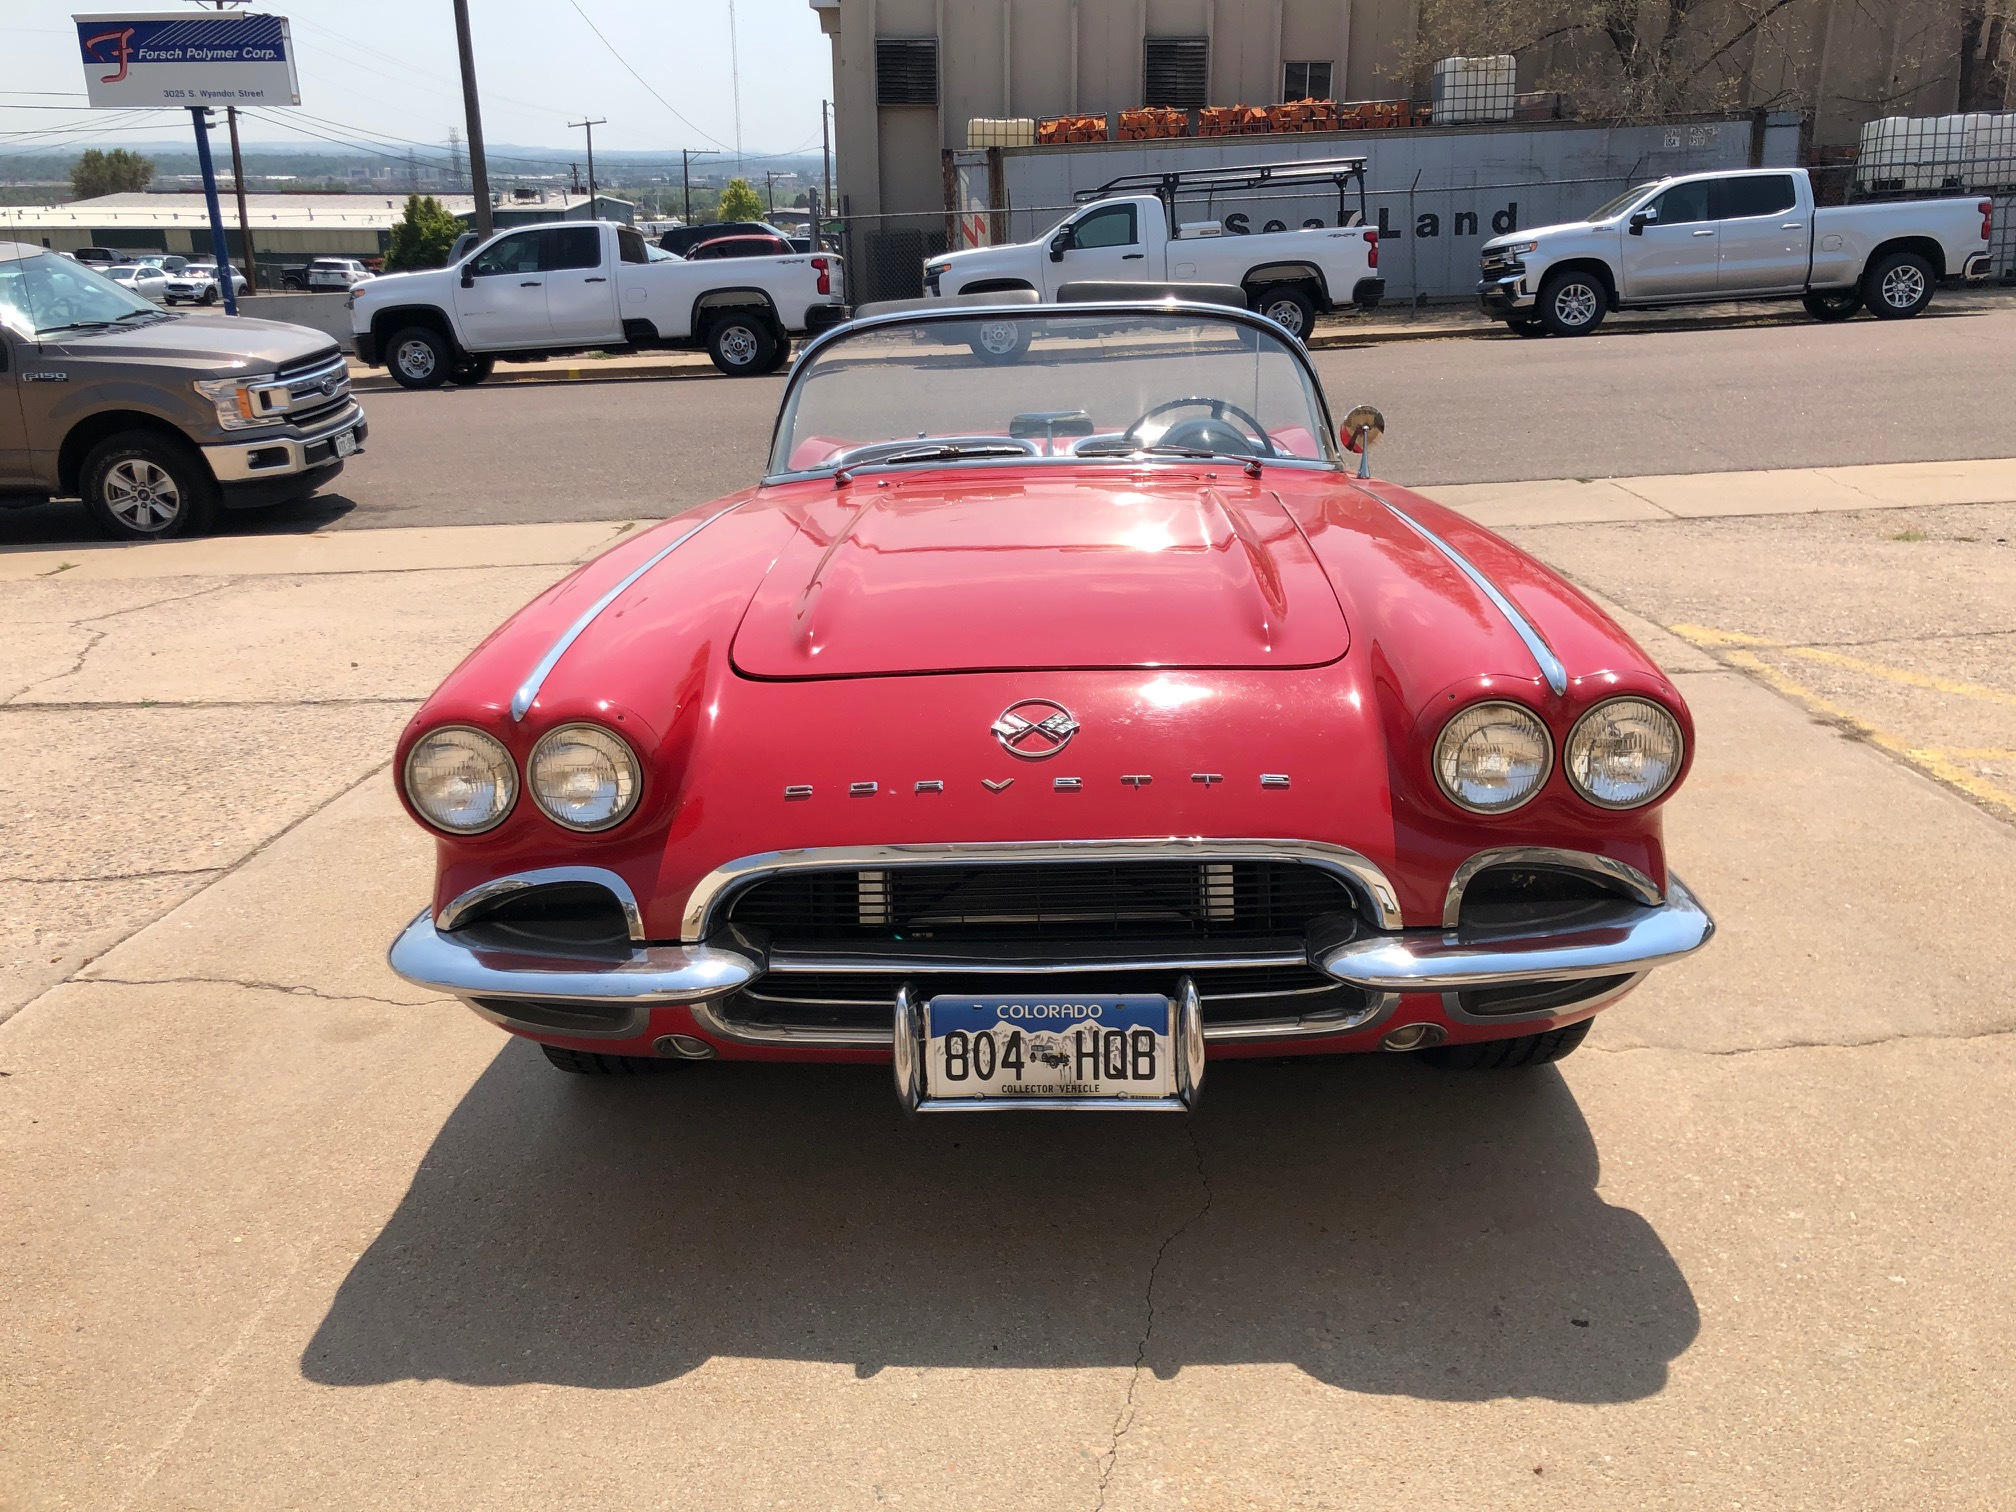 1962 Corvette LS1-powered